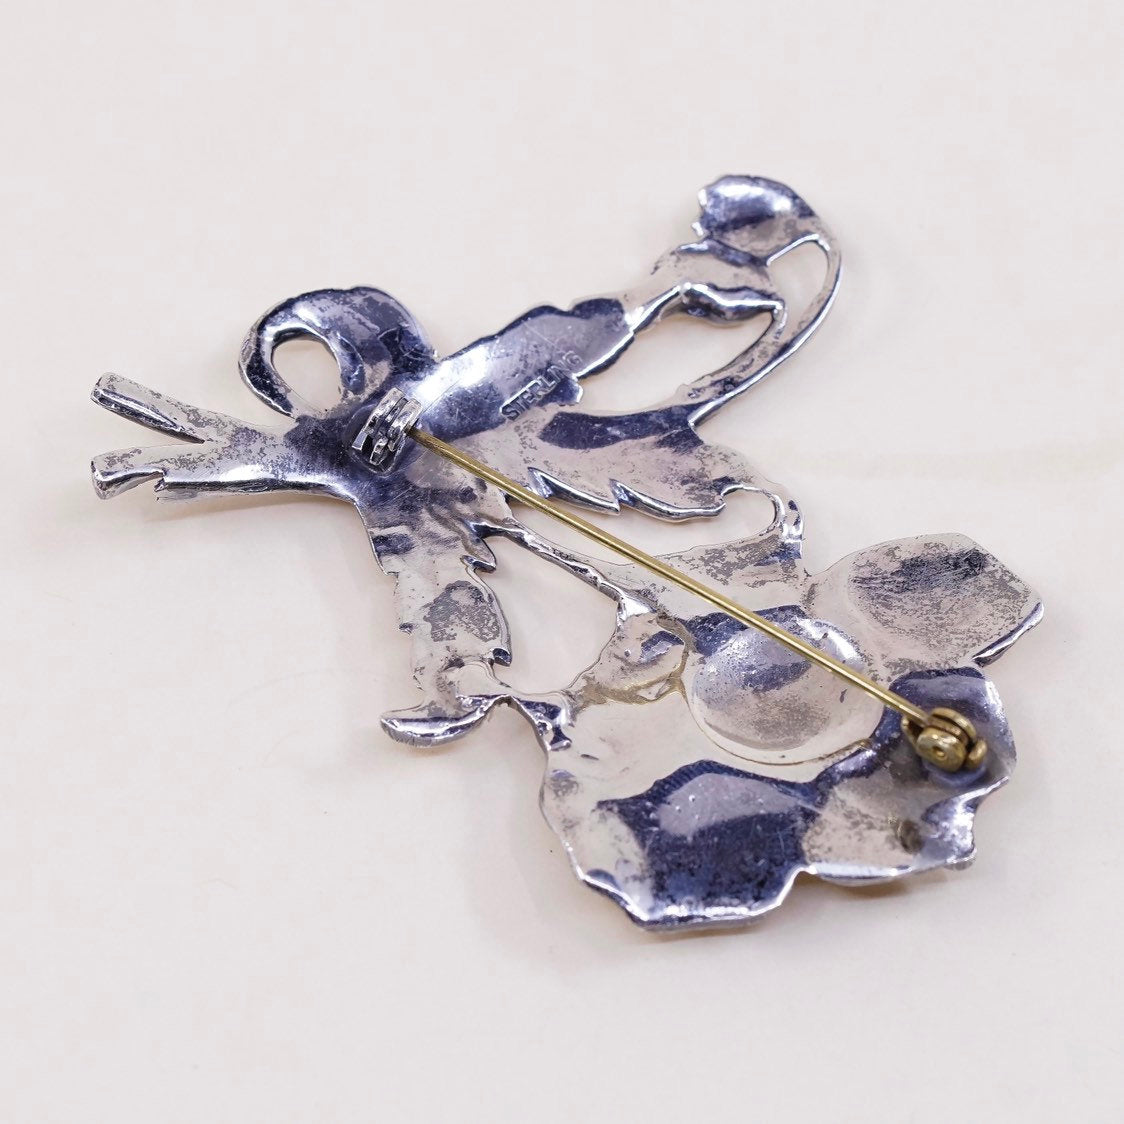 Vintage sterling silver handmade brooch, solid 925 silver flower pin